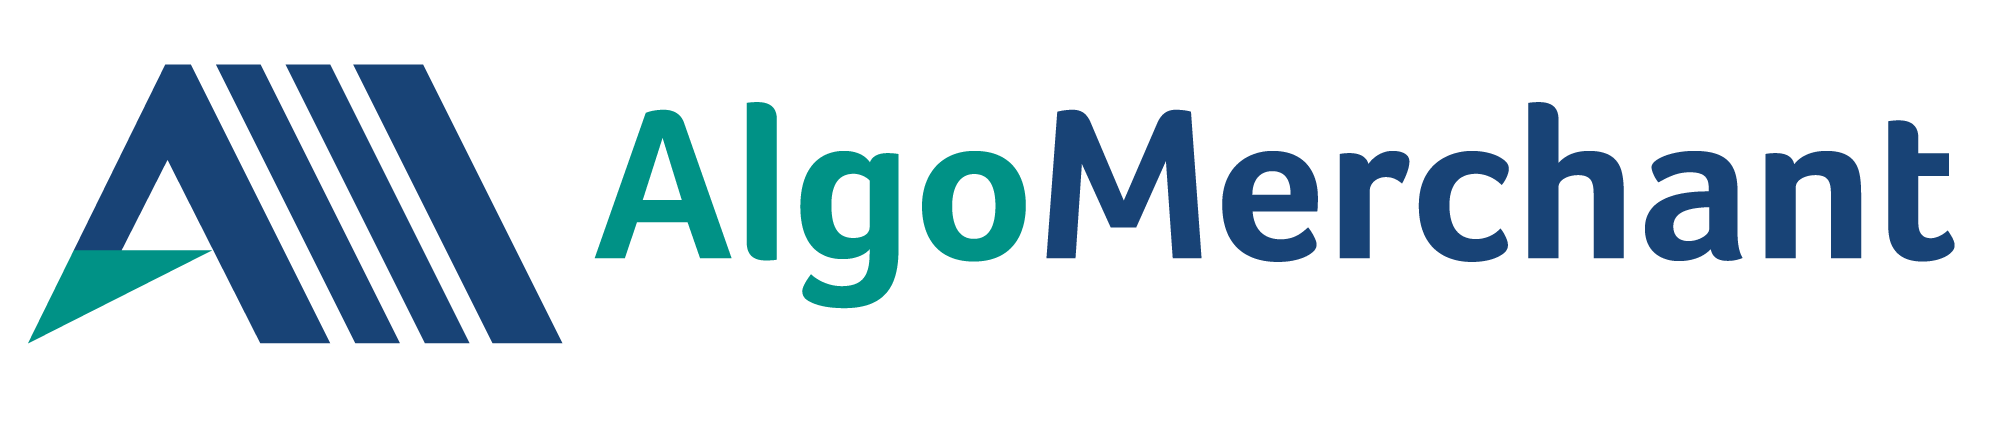 AlgoMerchant logo